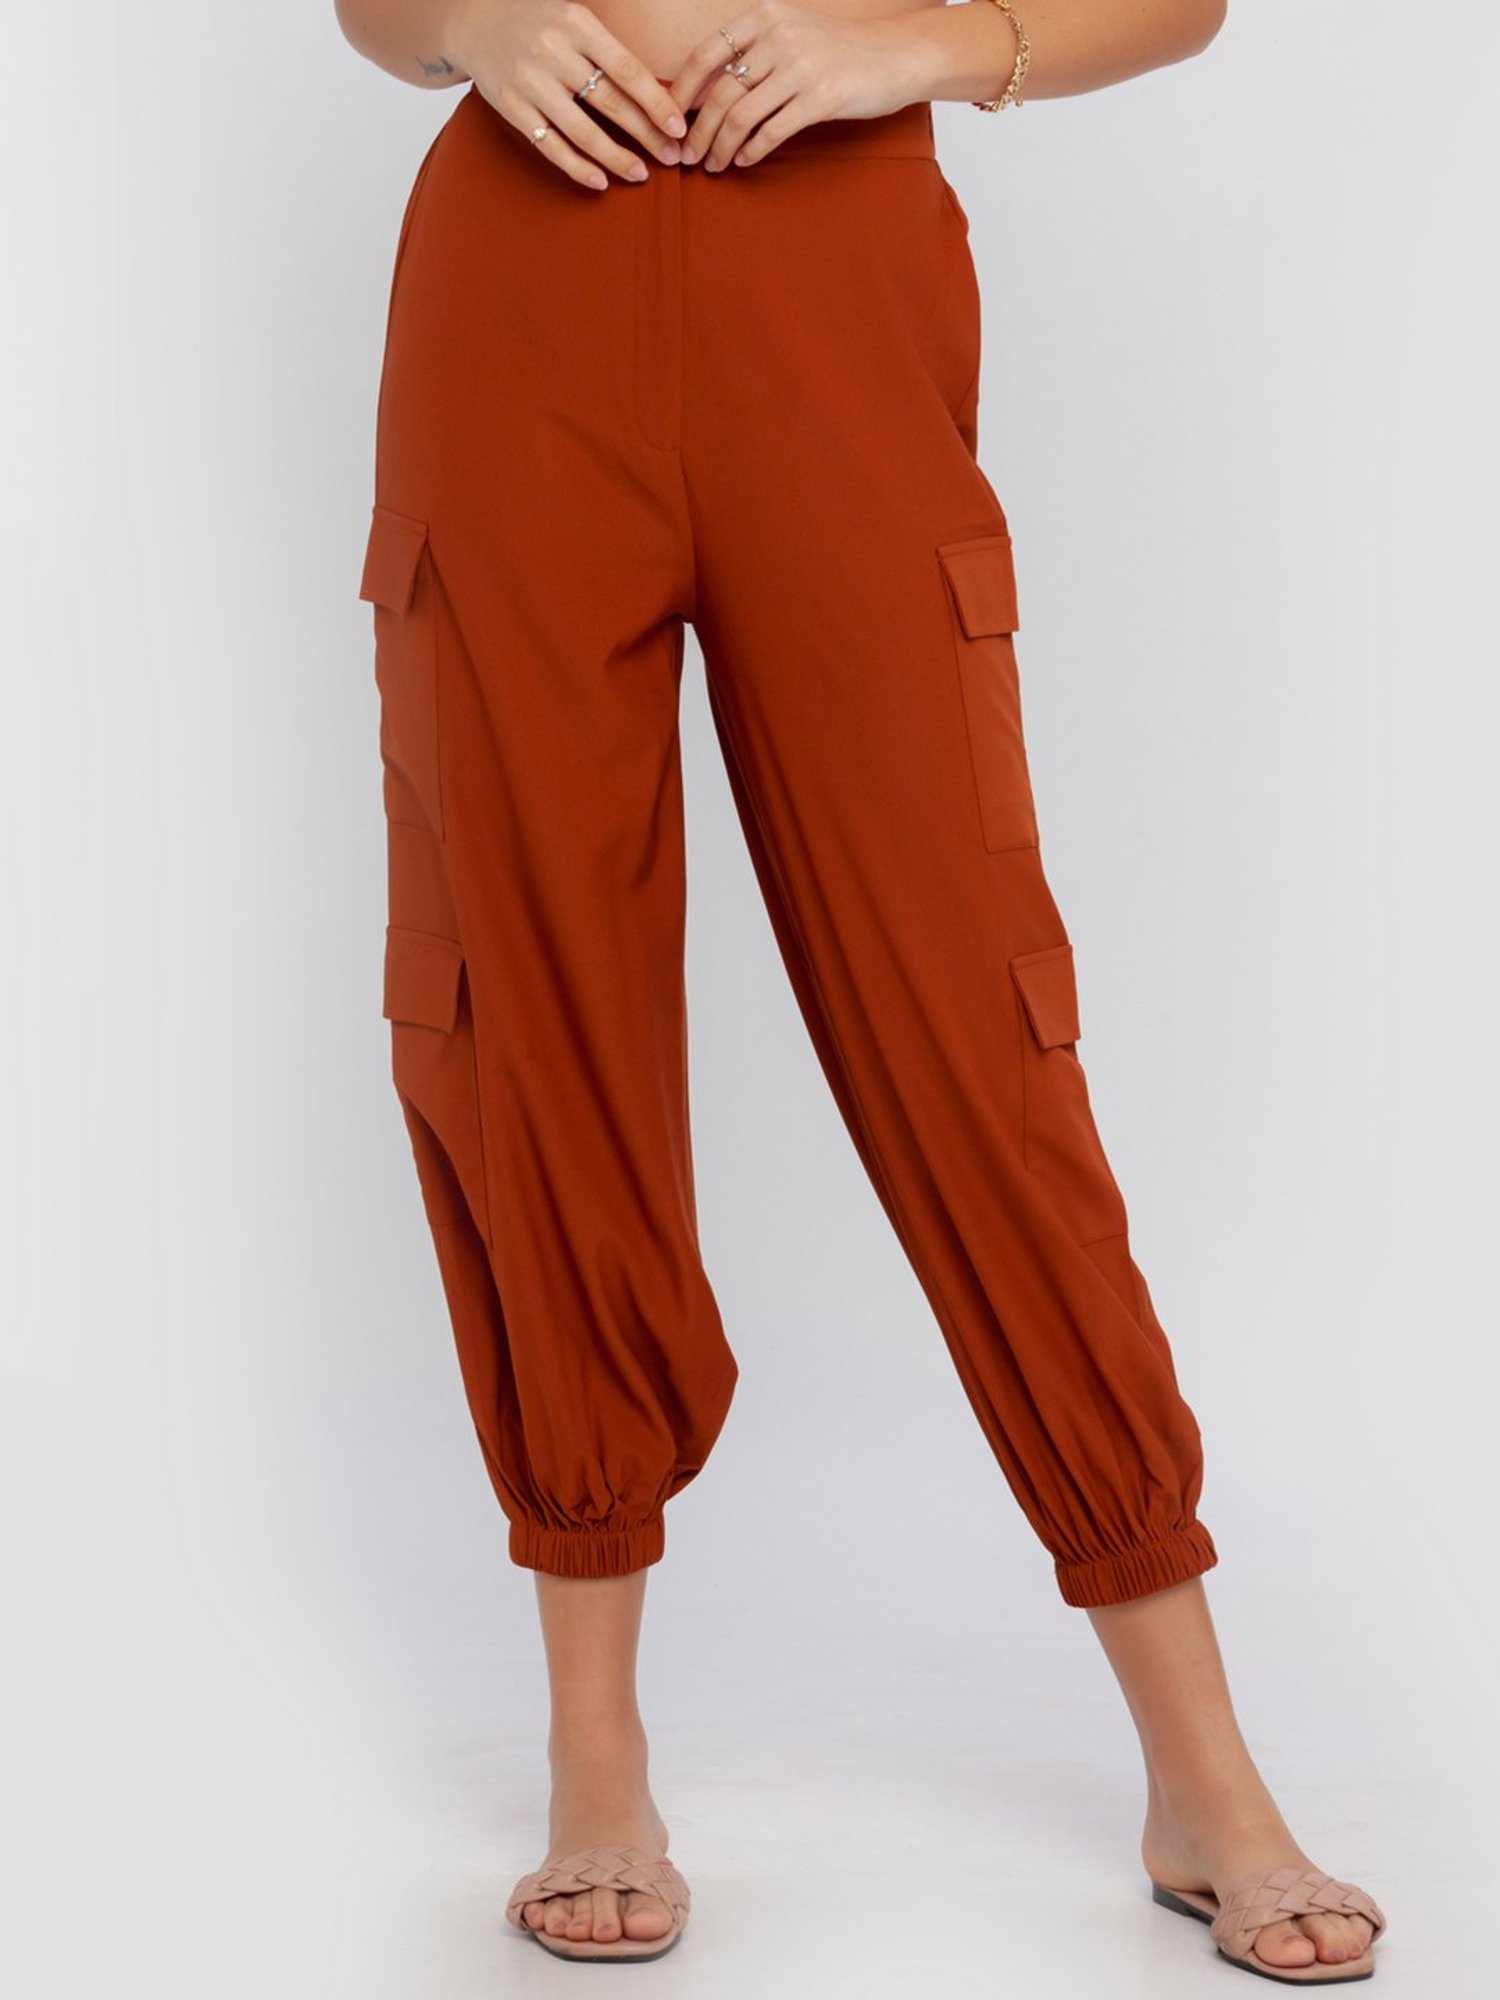 Puloru Orange Baggy Cargo Pants Women Casual High Elasitc Waist  Straight-Leg Trousers with Side Pockets